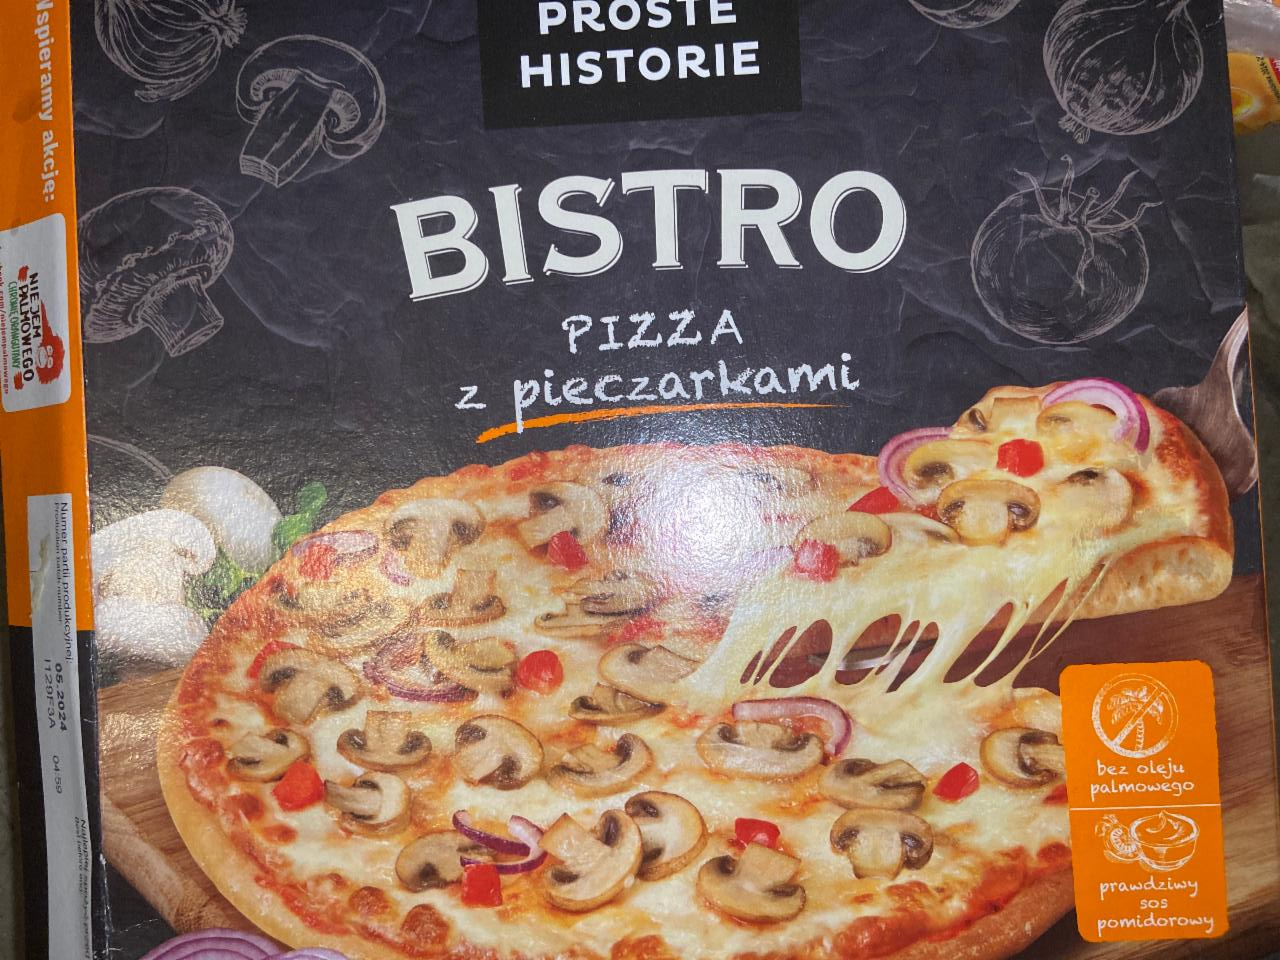 Фото - бистро пицца с грибами Proste Historie